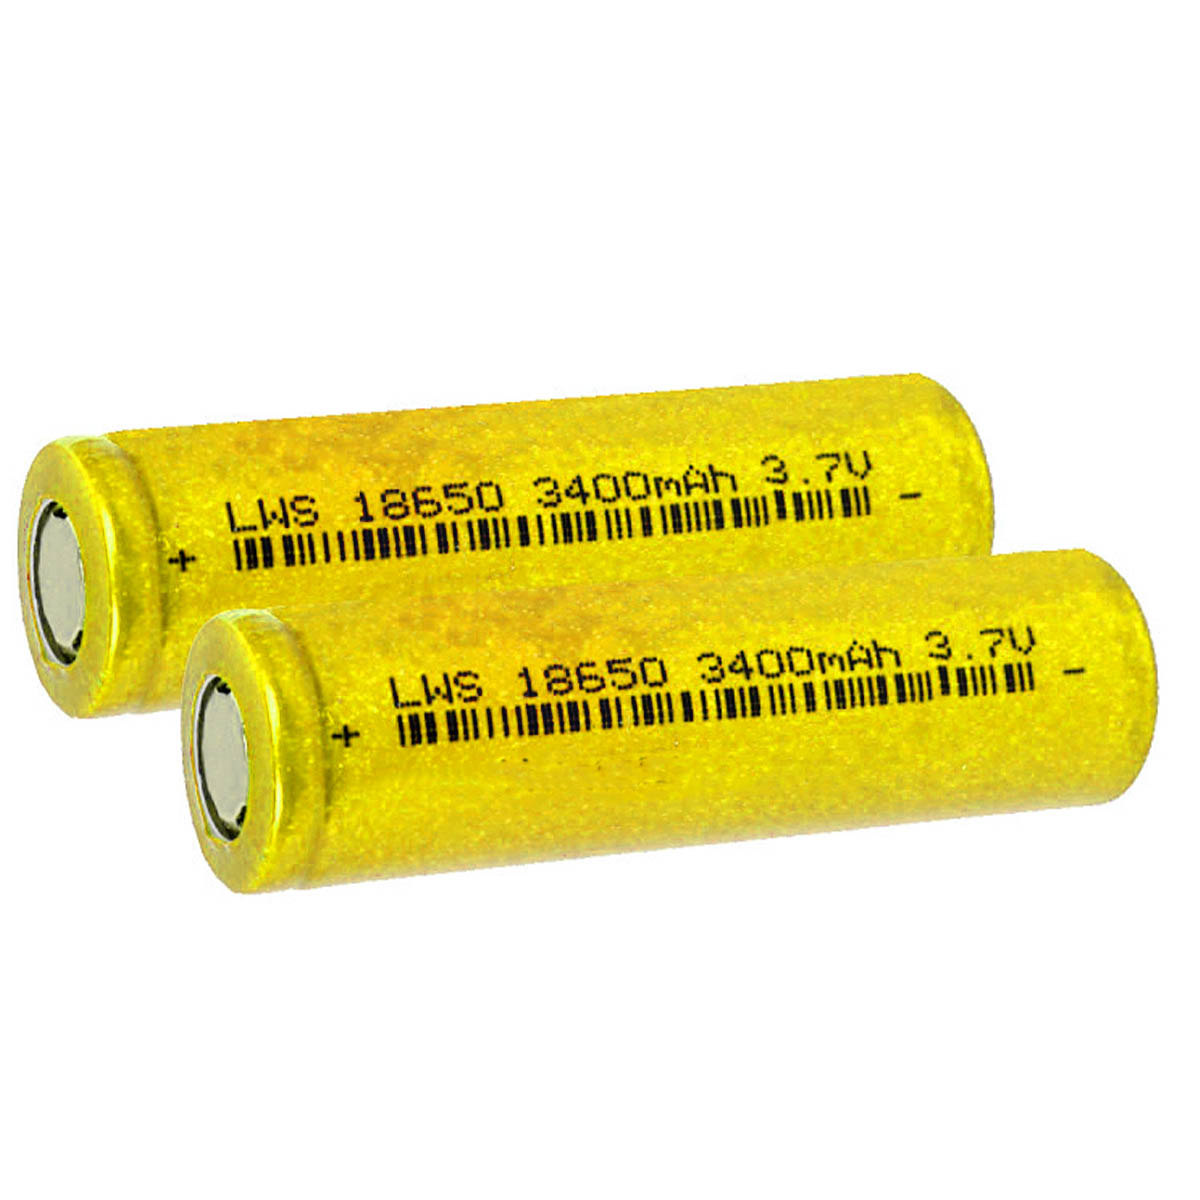 АКБ (Аккумулятор) G70 18650 LTP-13, 3.7V, 3400mah, цвет желтый